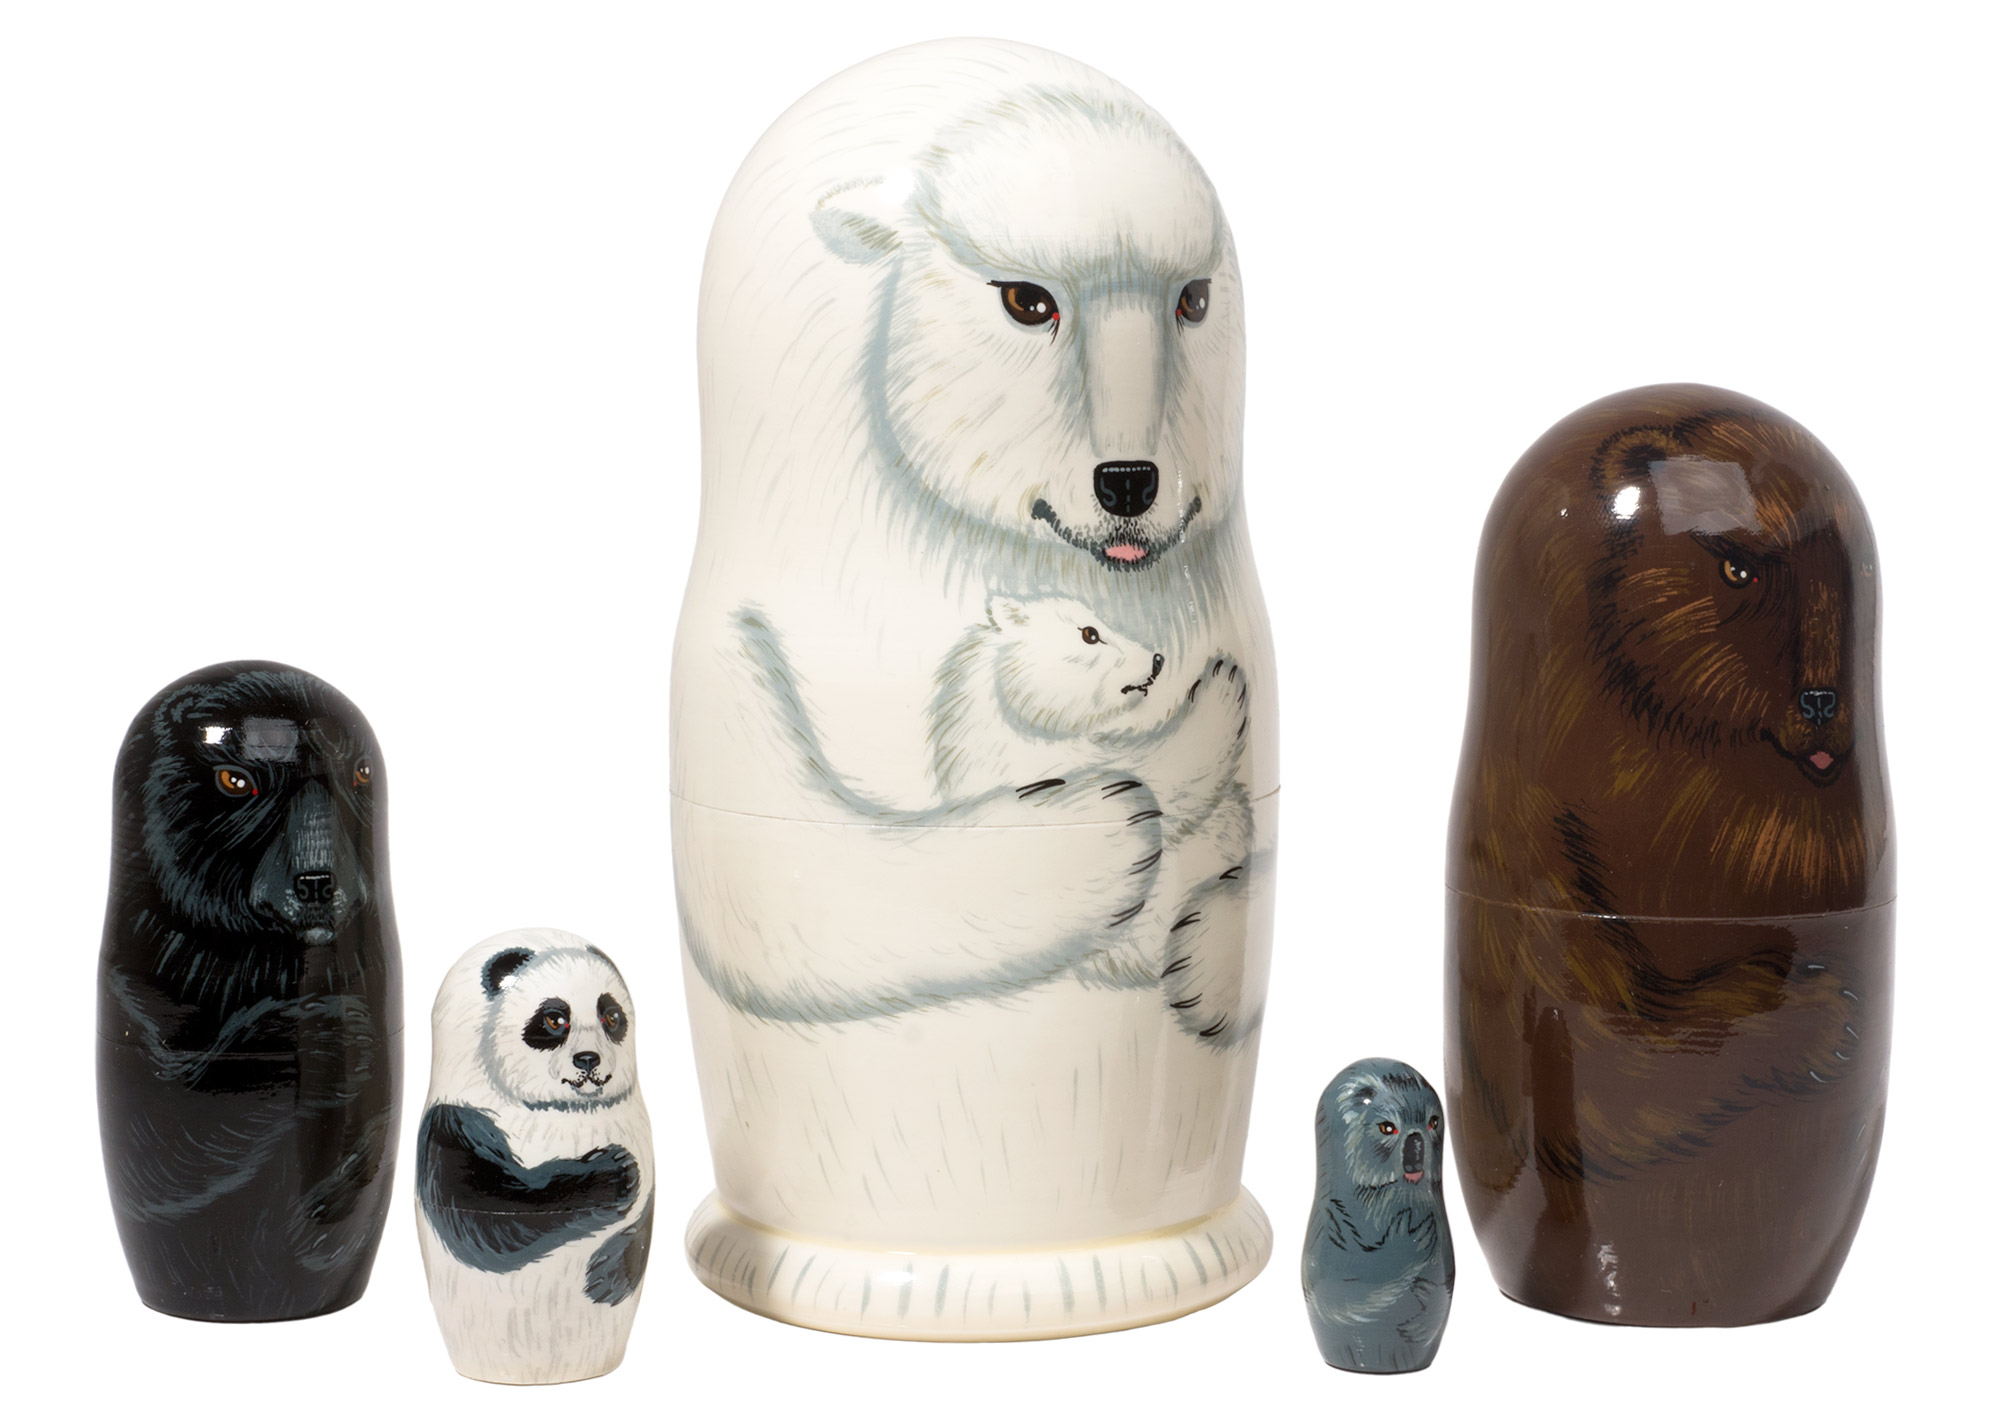 Buy Bears of the World Nesting Doll 5pc./6" at GoldenCockerel.com